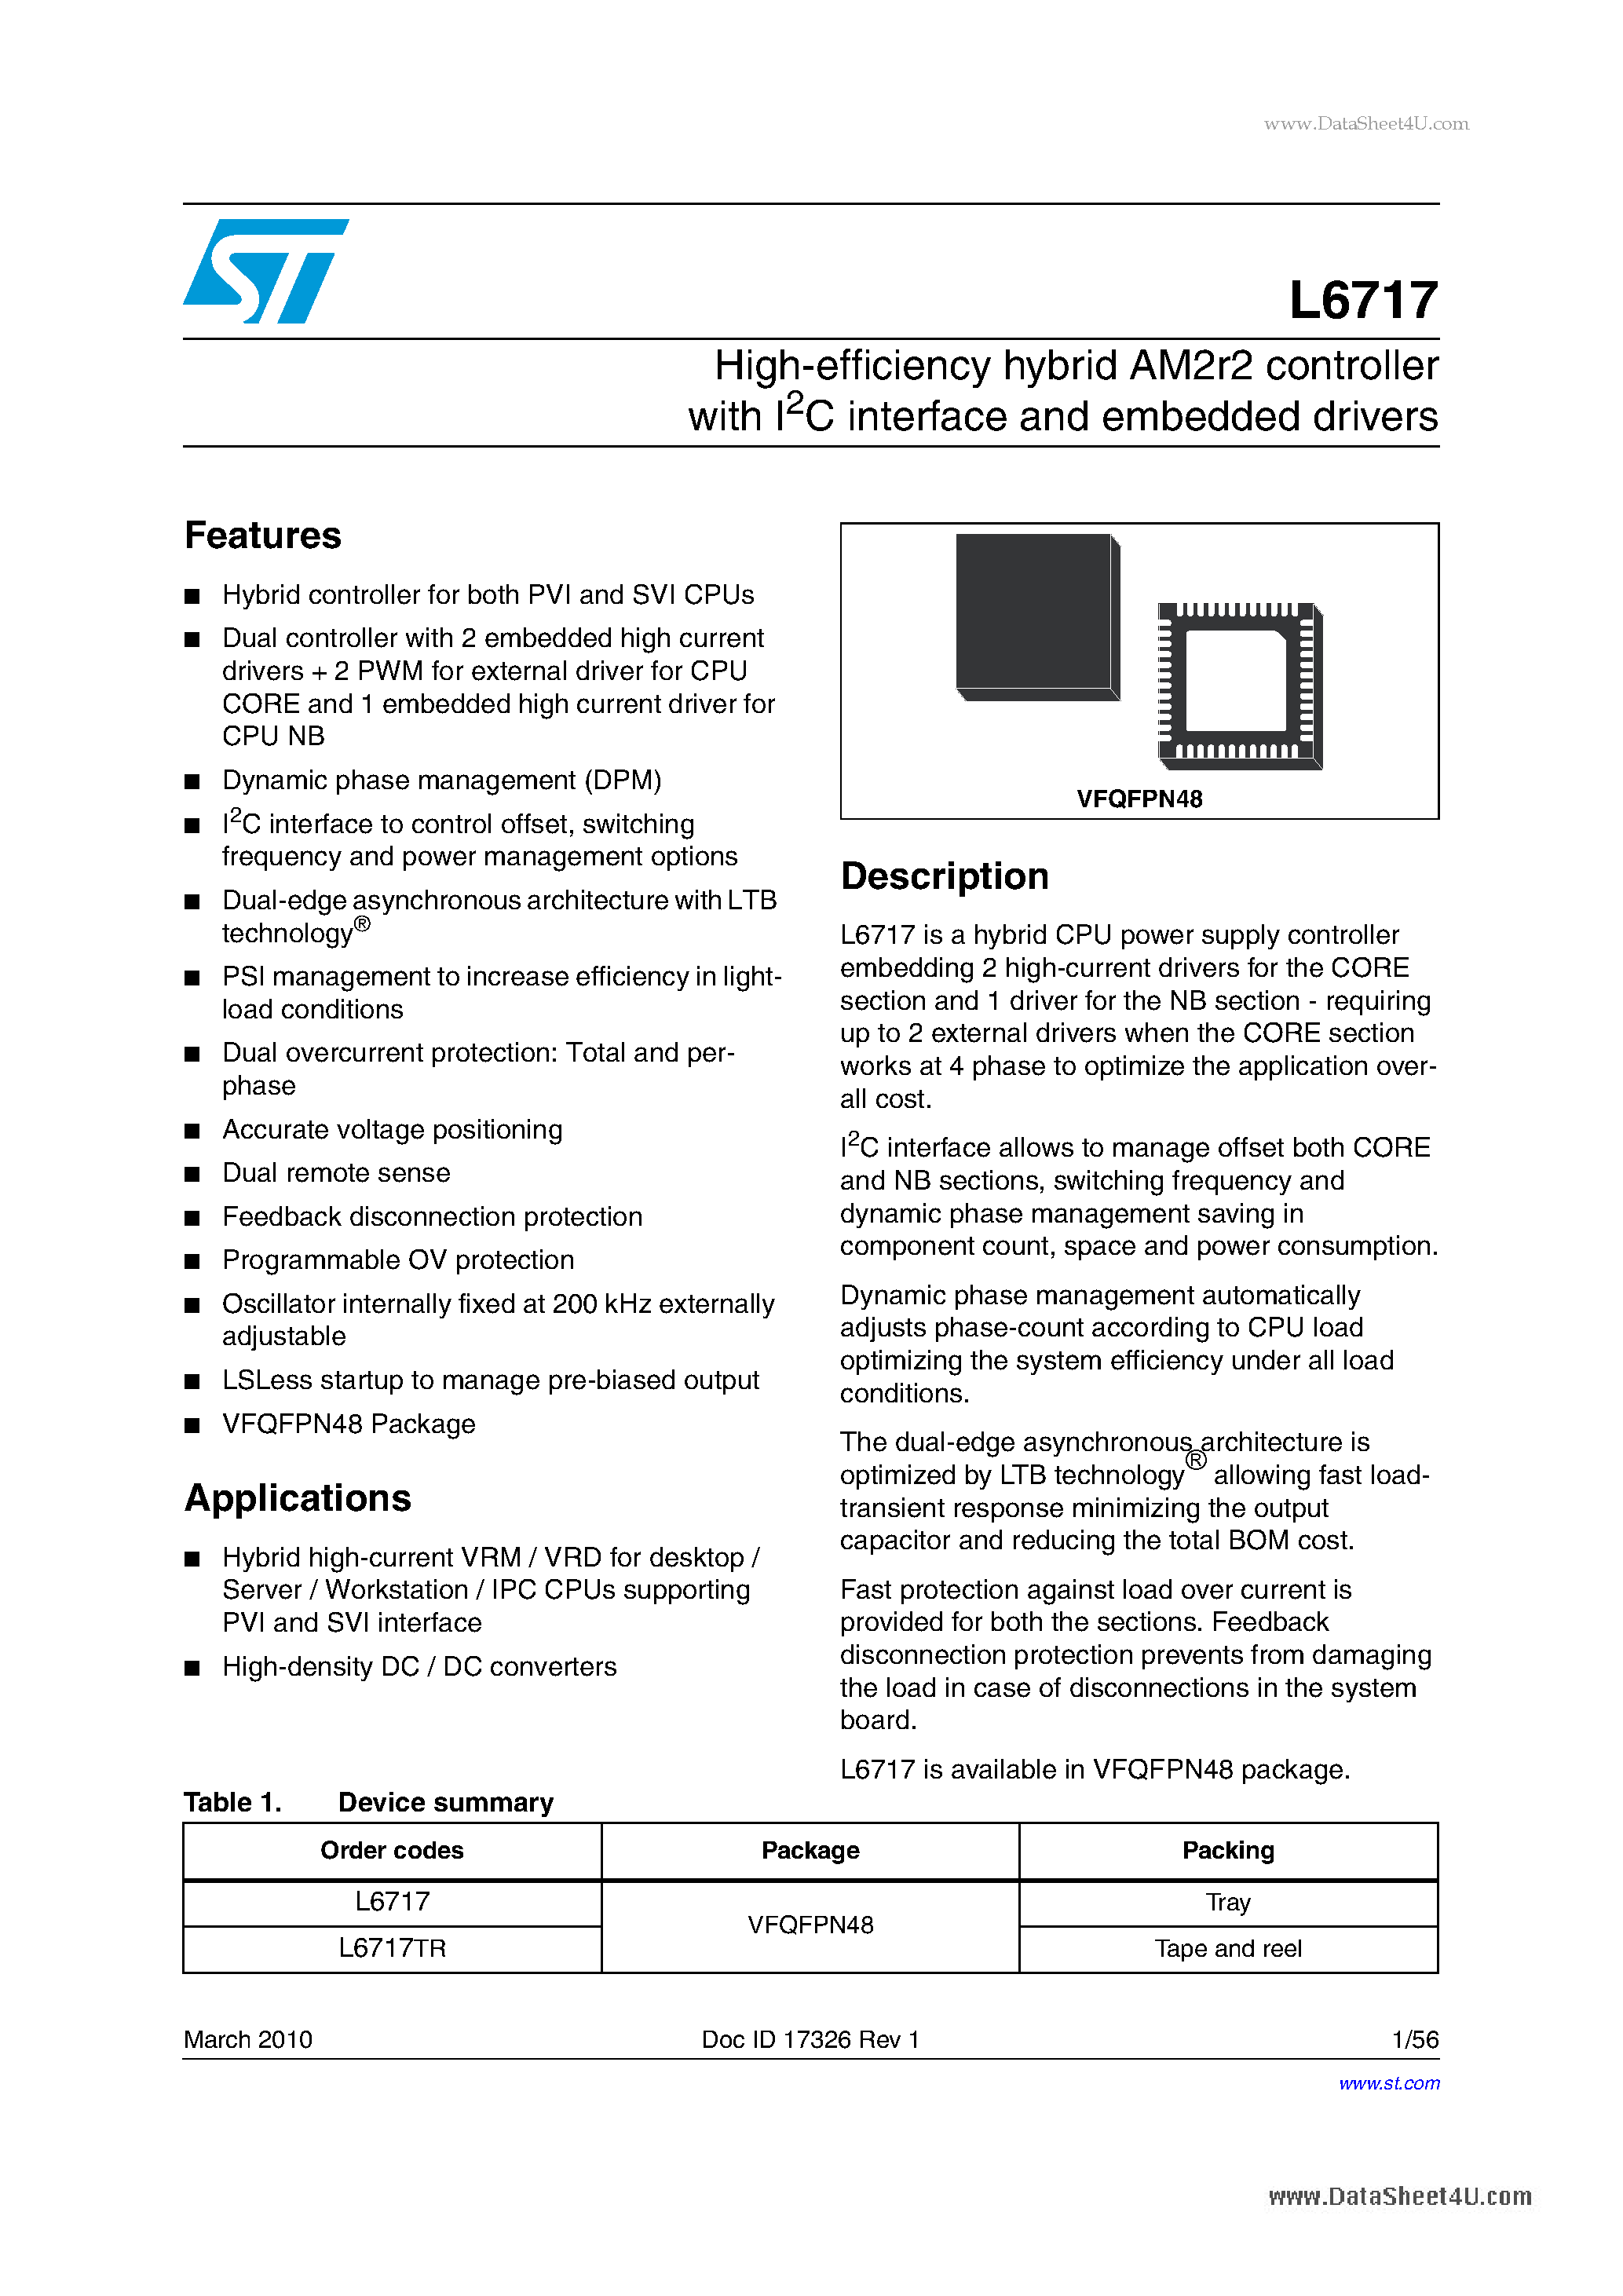 Datasheet L6717 - High-efficiency hybrid AM2r2 controller page 1